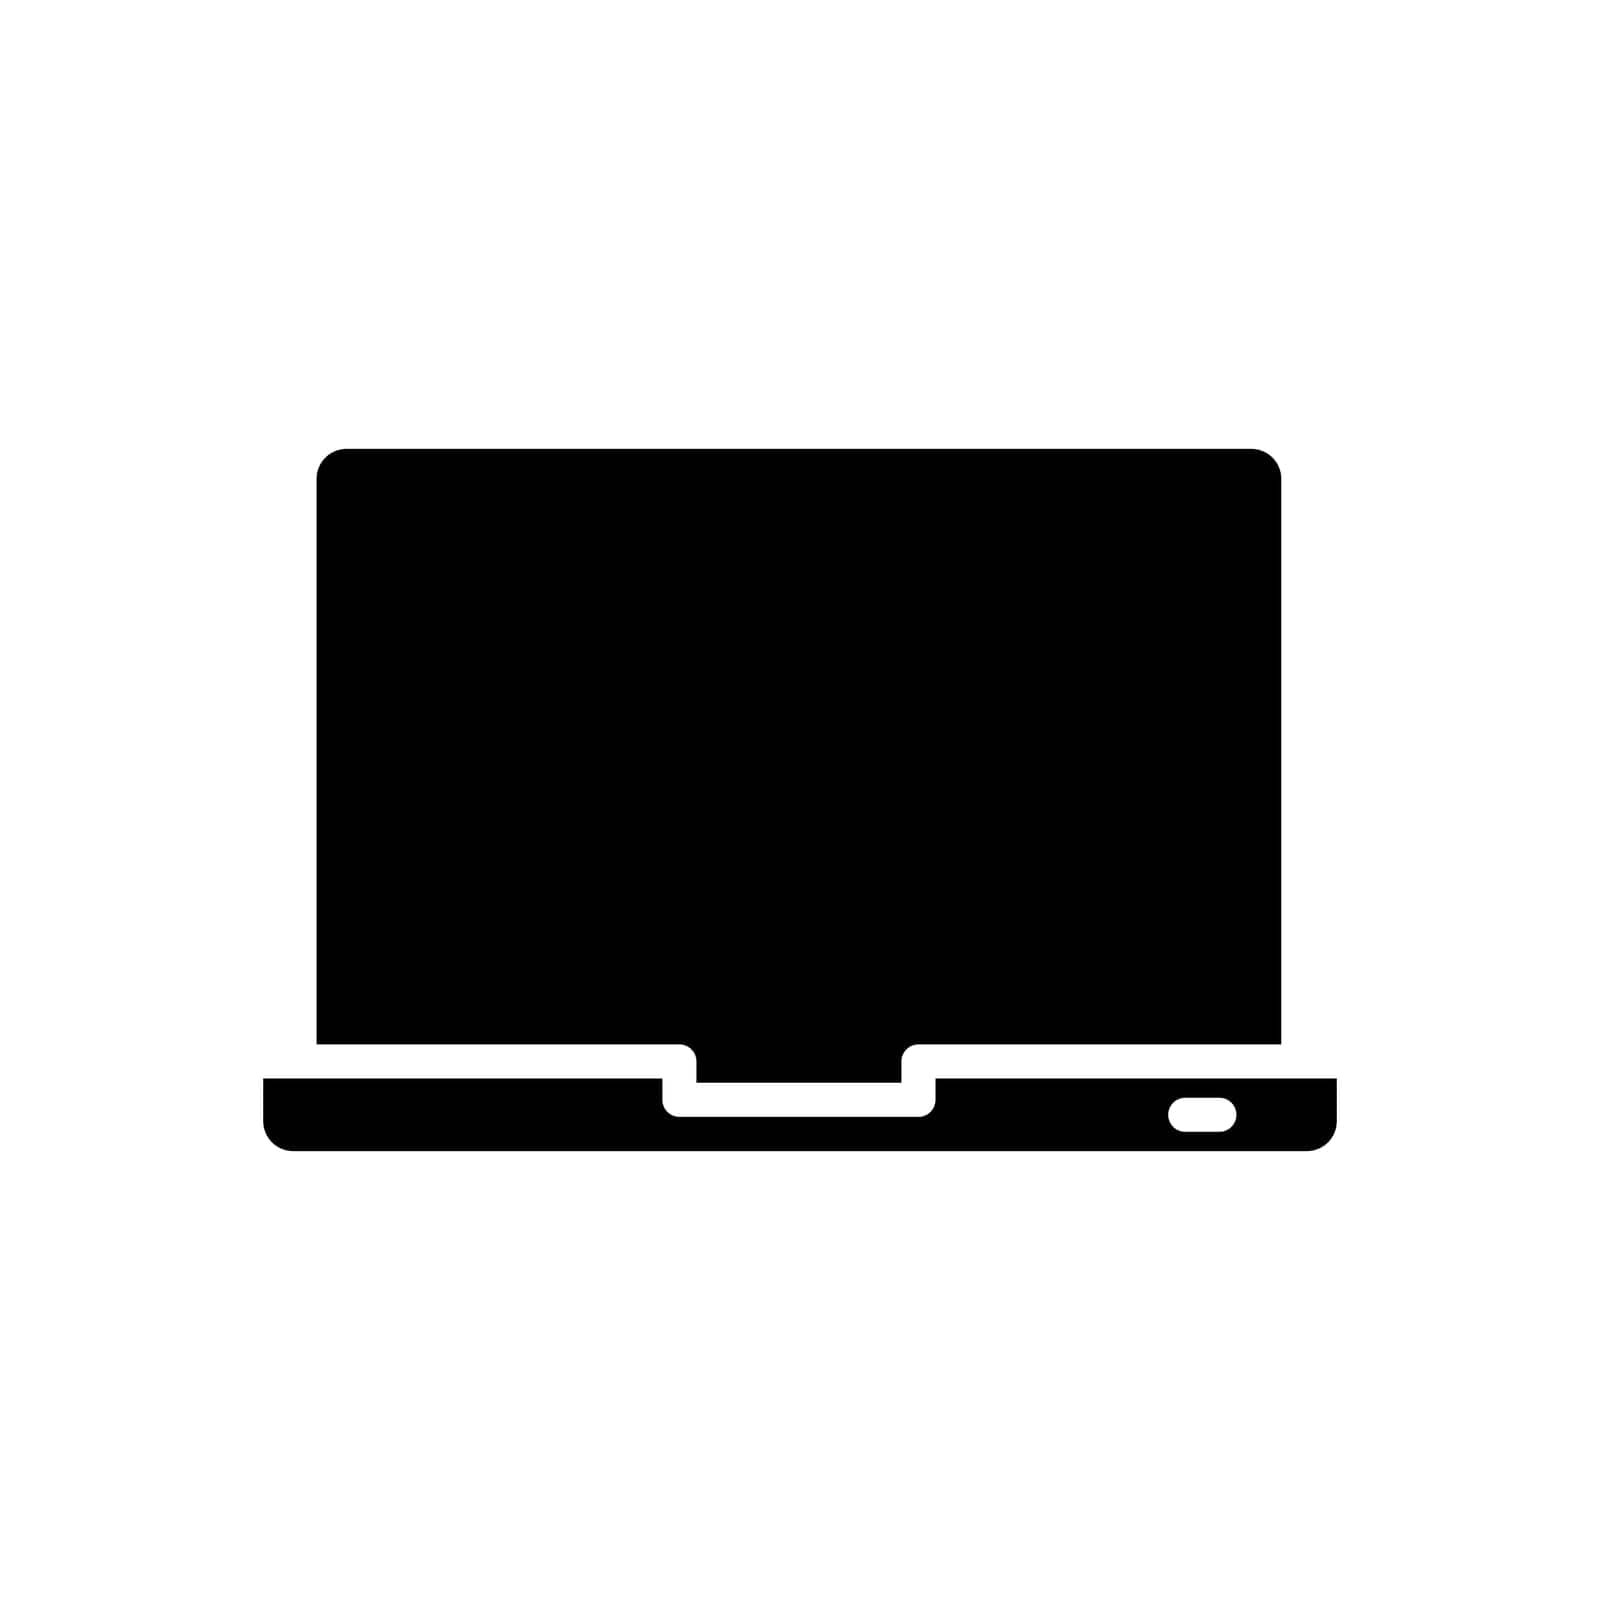 Laptop glyph vector icon isolated on white background. Laptop glyph vector icon for web, mobile and ui design